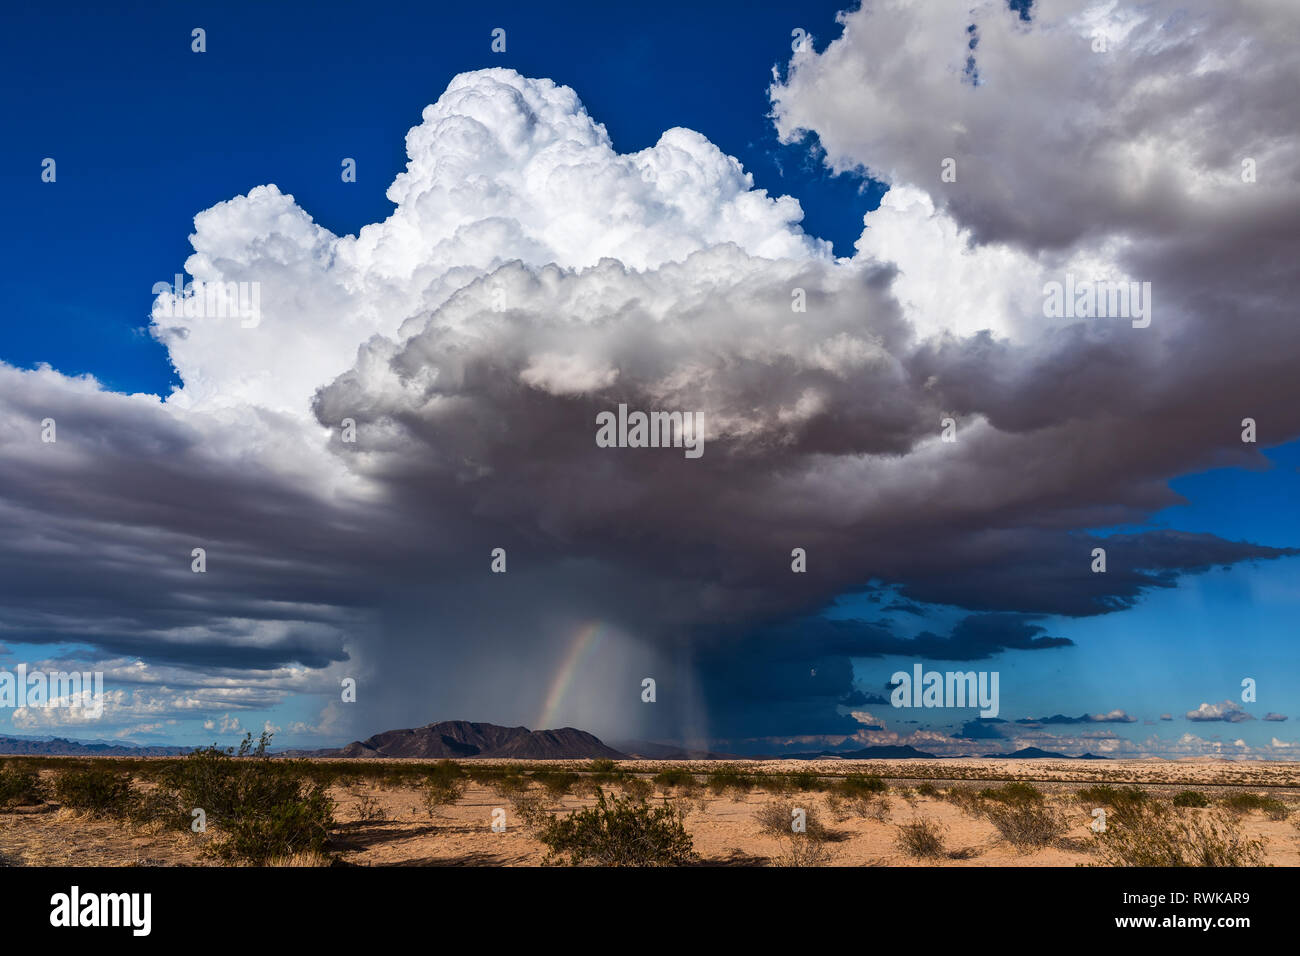 Cumulonimbus cloud with heavy rain and a landspout tornado near Parker, Arizona Stock Photo